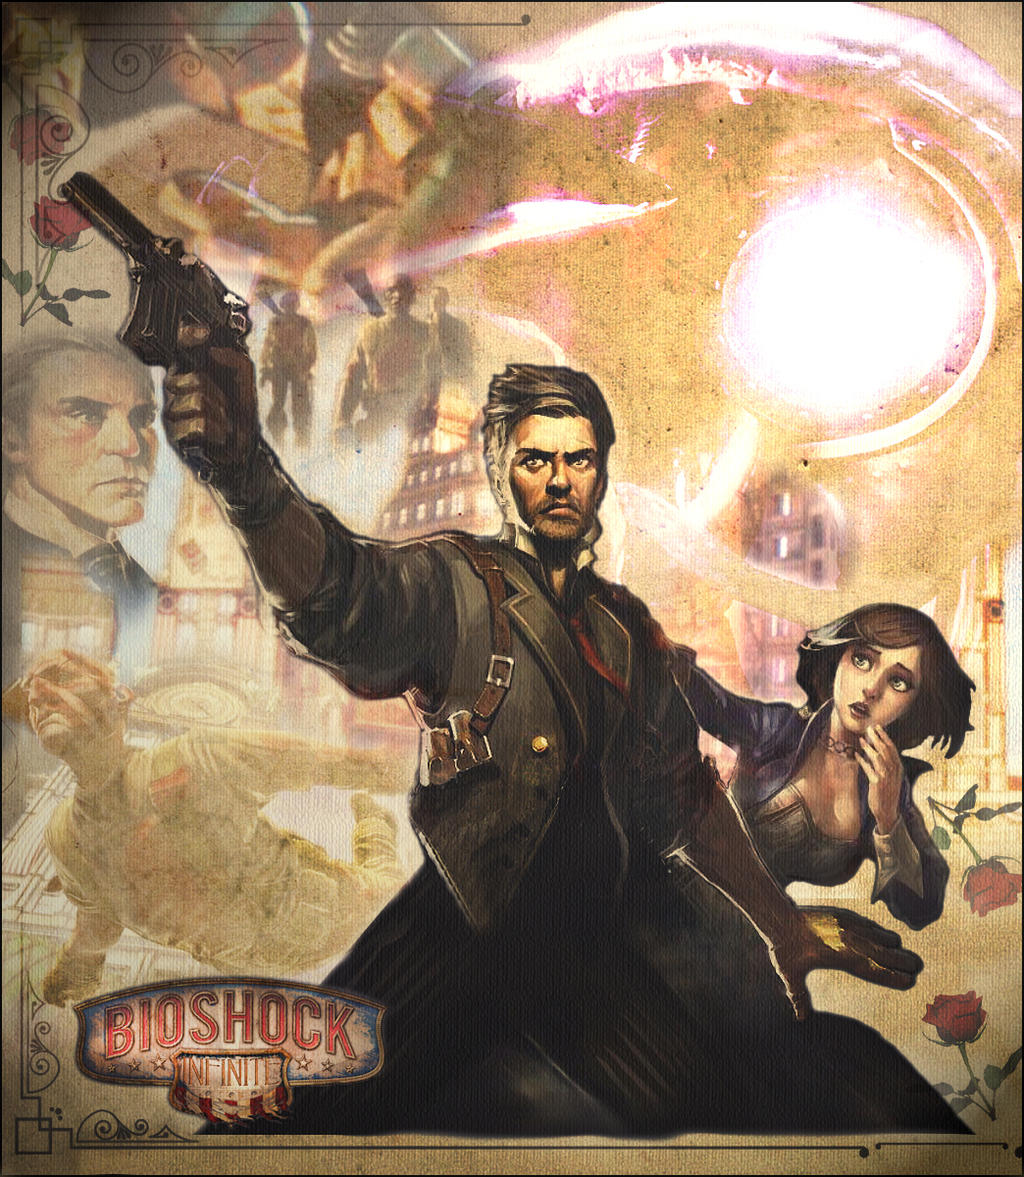 Bioshock Infinite Fan Poster by toughraid3r37890 on DeviantArt